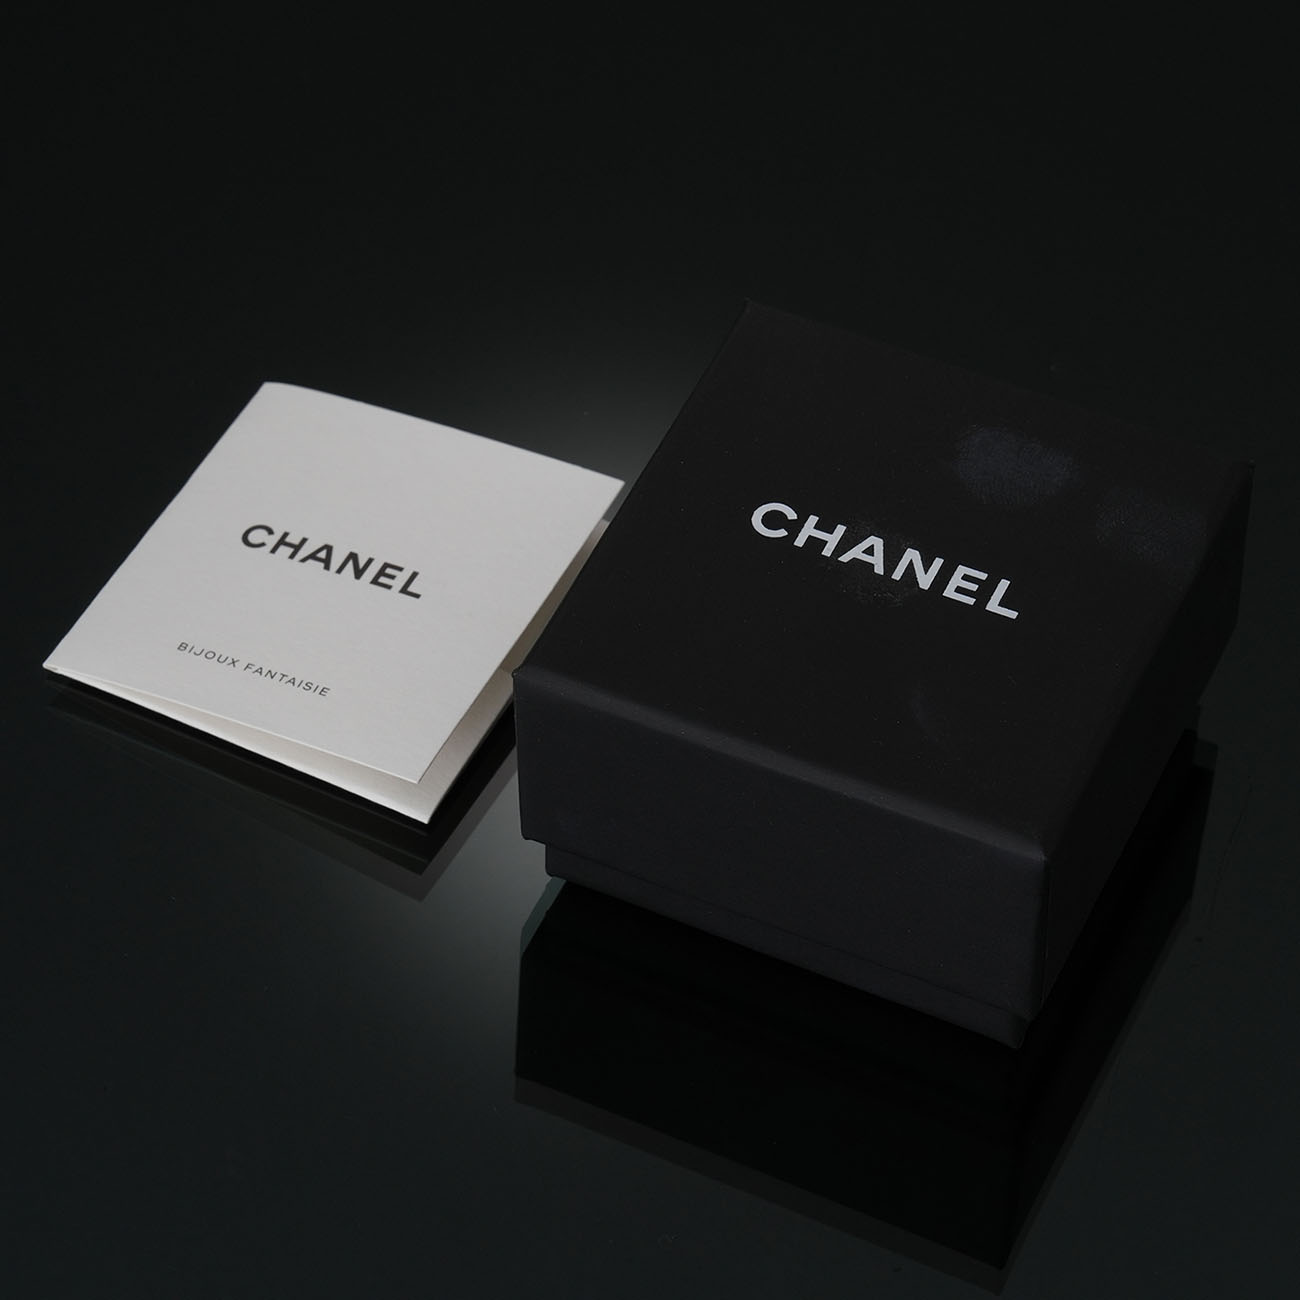 CHANEL(USED)샤넬 ABC657 크리스탈 별 귀걸이 (새상품 ) NEW PRODUCT